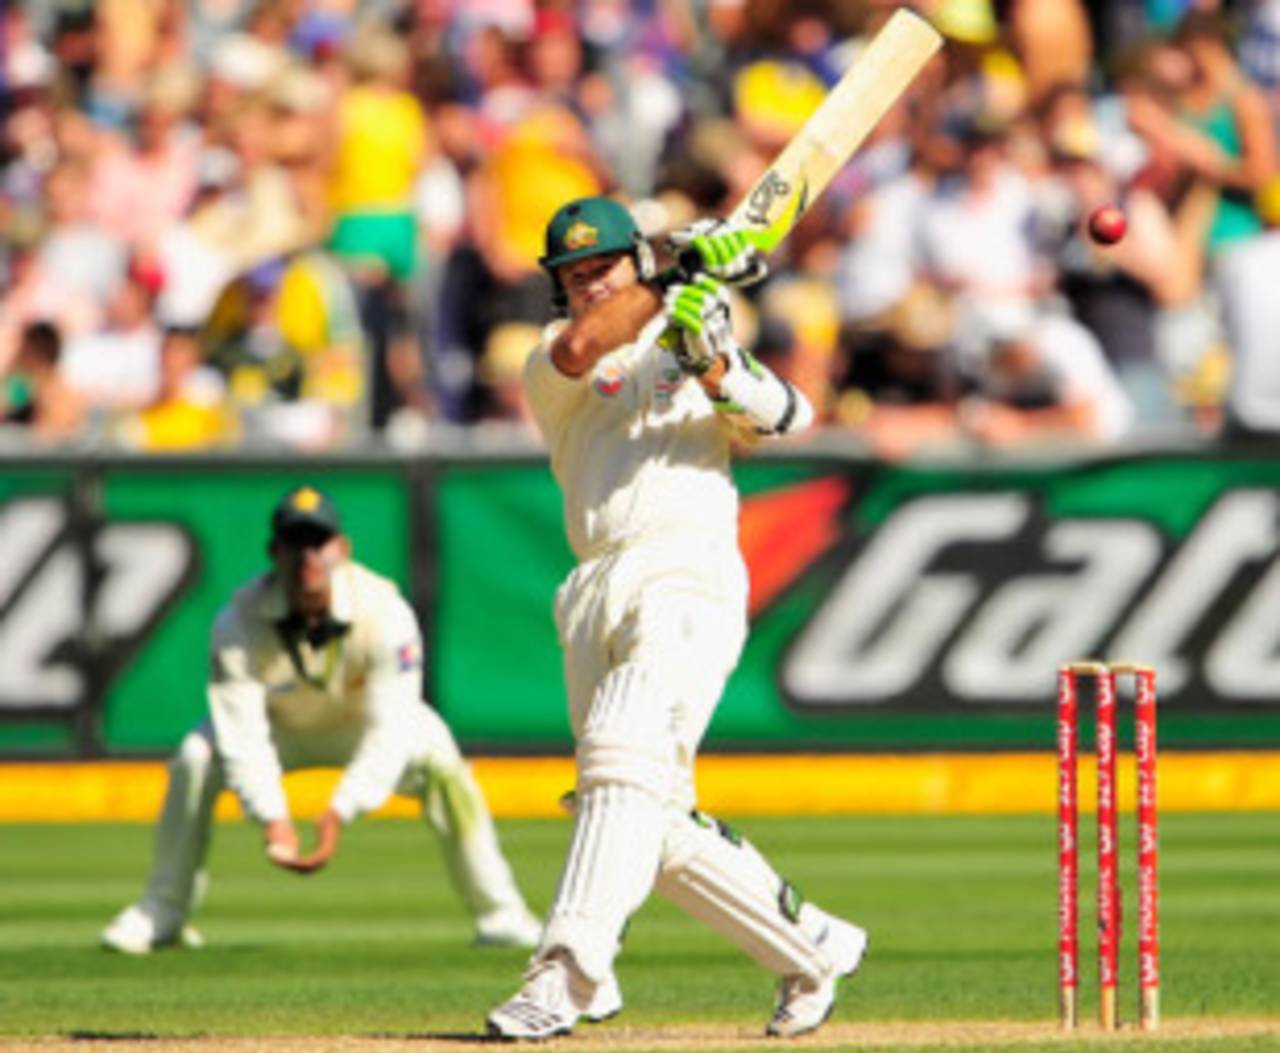 Ricky Ponting pulls on the way to 57, Australia v Pakistan, 1st Test, Melbourne, December 26, 2009